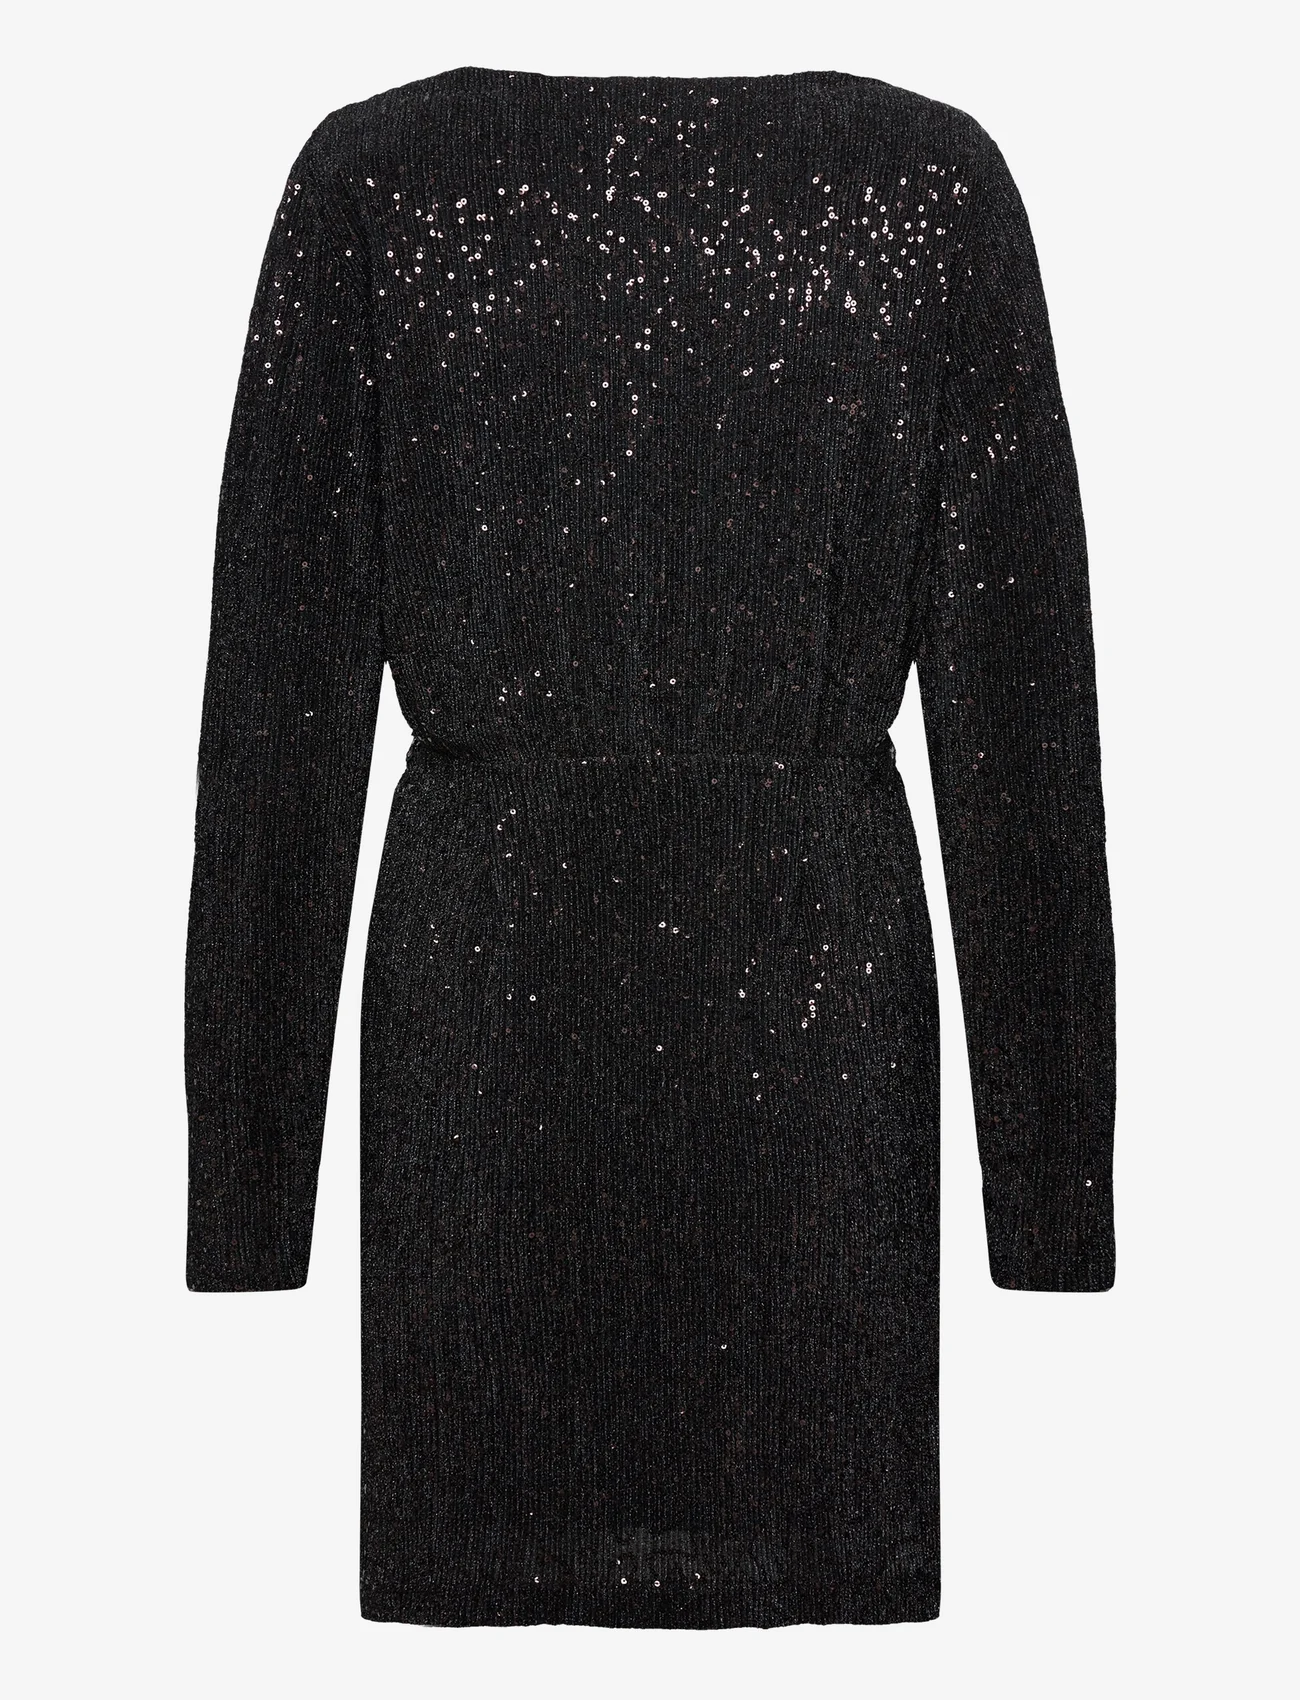 Object - OBJTULUA L/S SHORT DRESS 130 - feestelijke kleding voor outlet-prijzen - black - 1